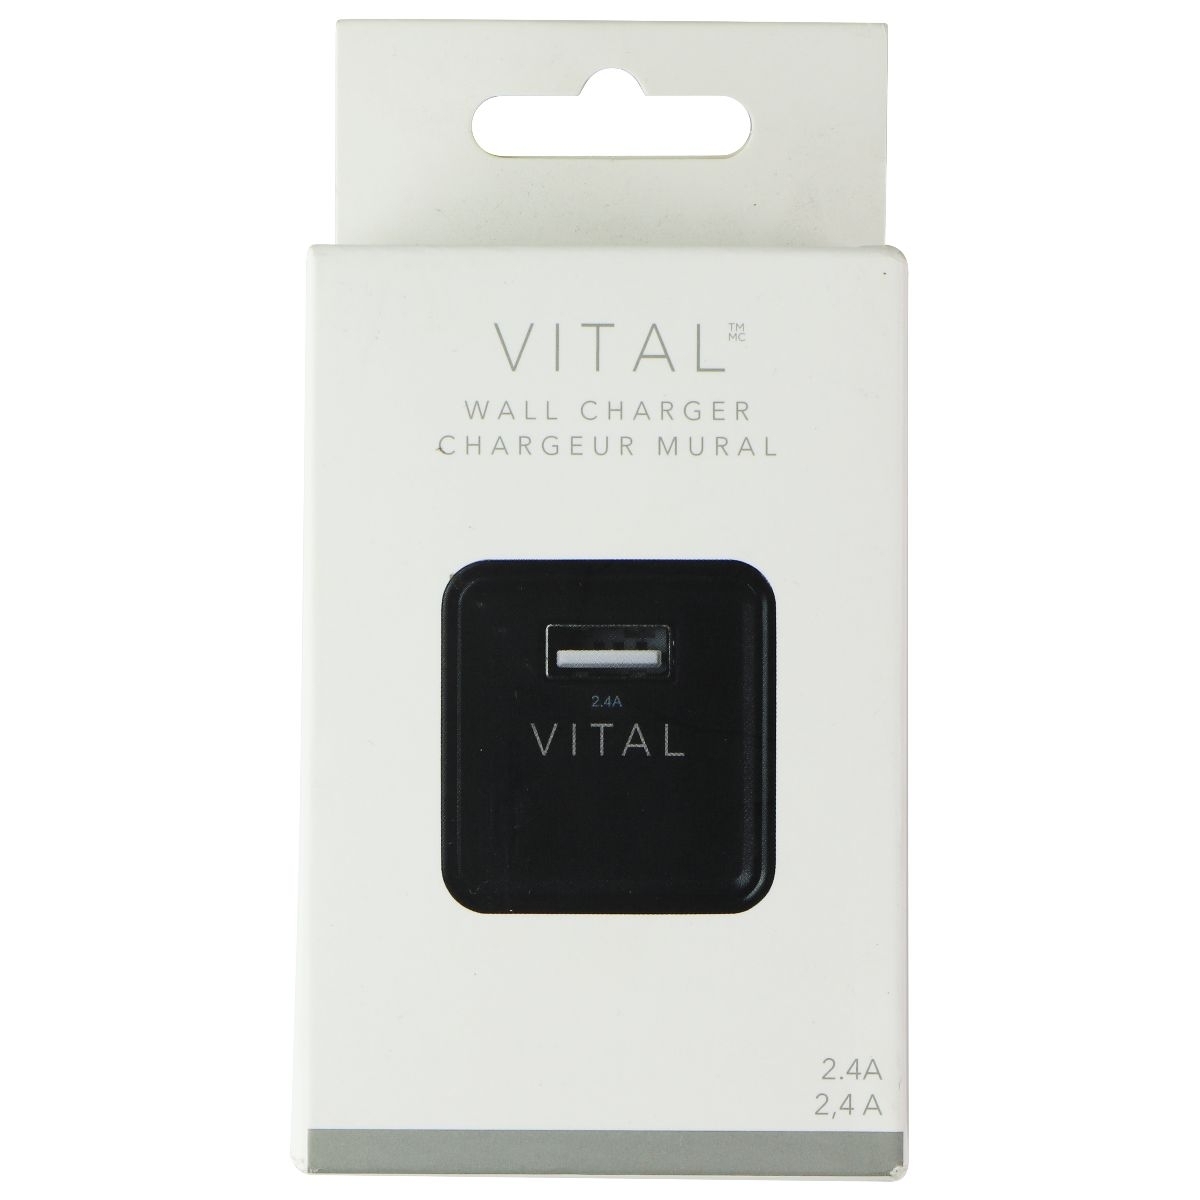 Vital (2.4A) Single USB Wall Charger Travel Adapter - Black (8024381C) (Refurbished)